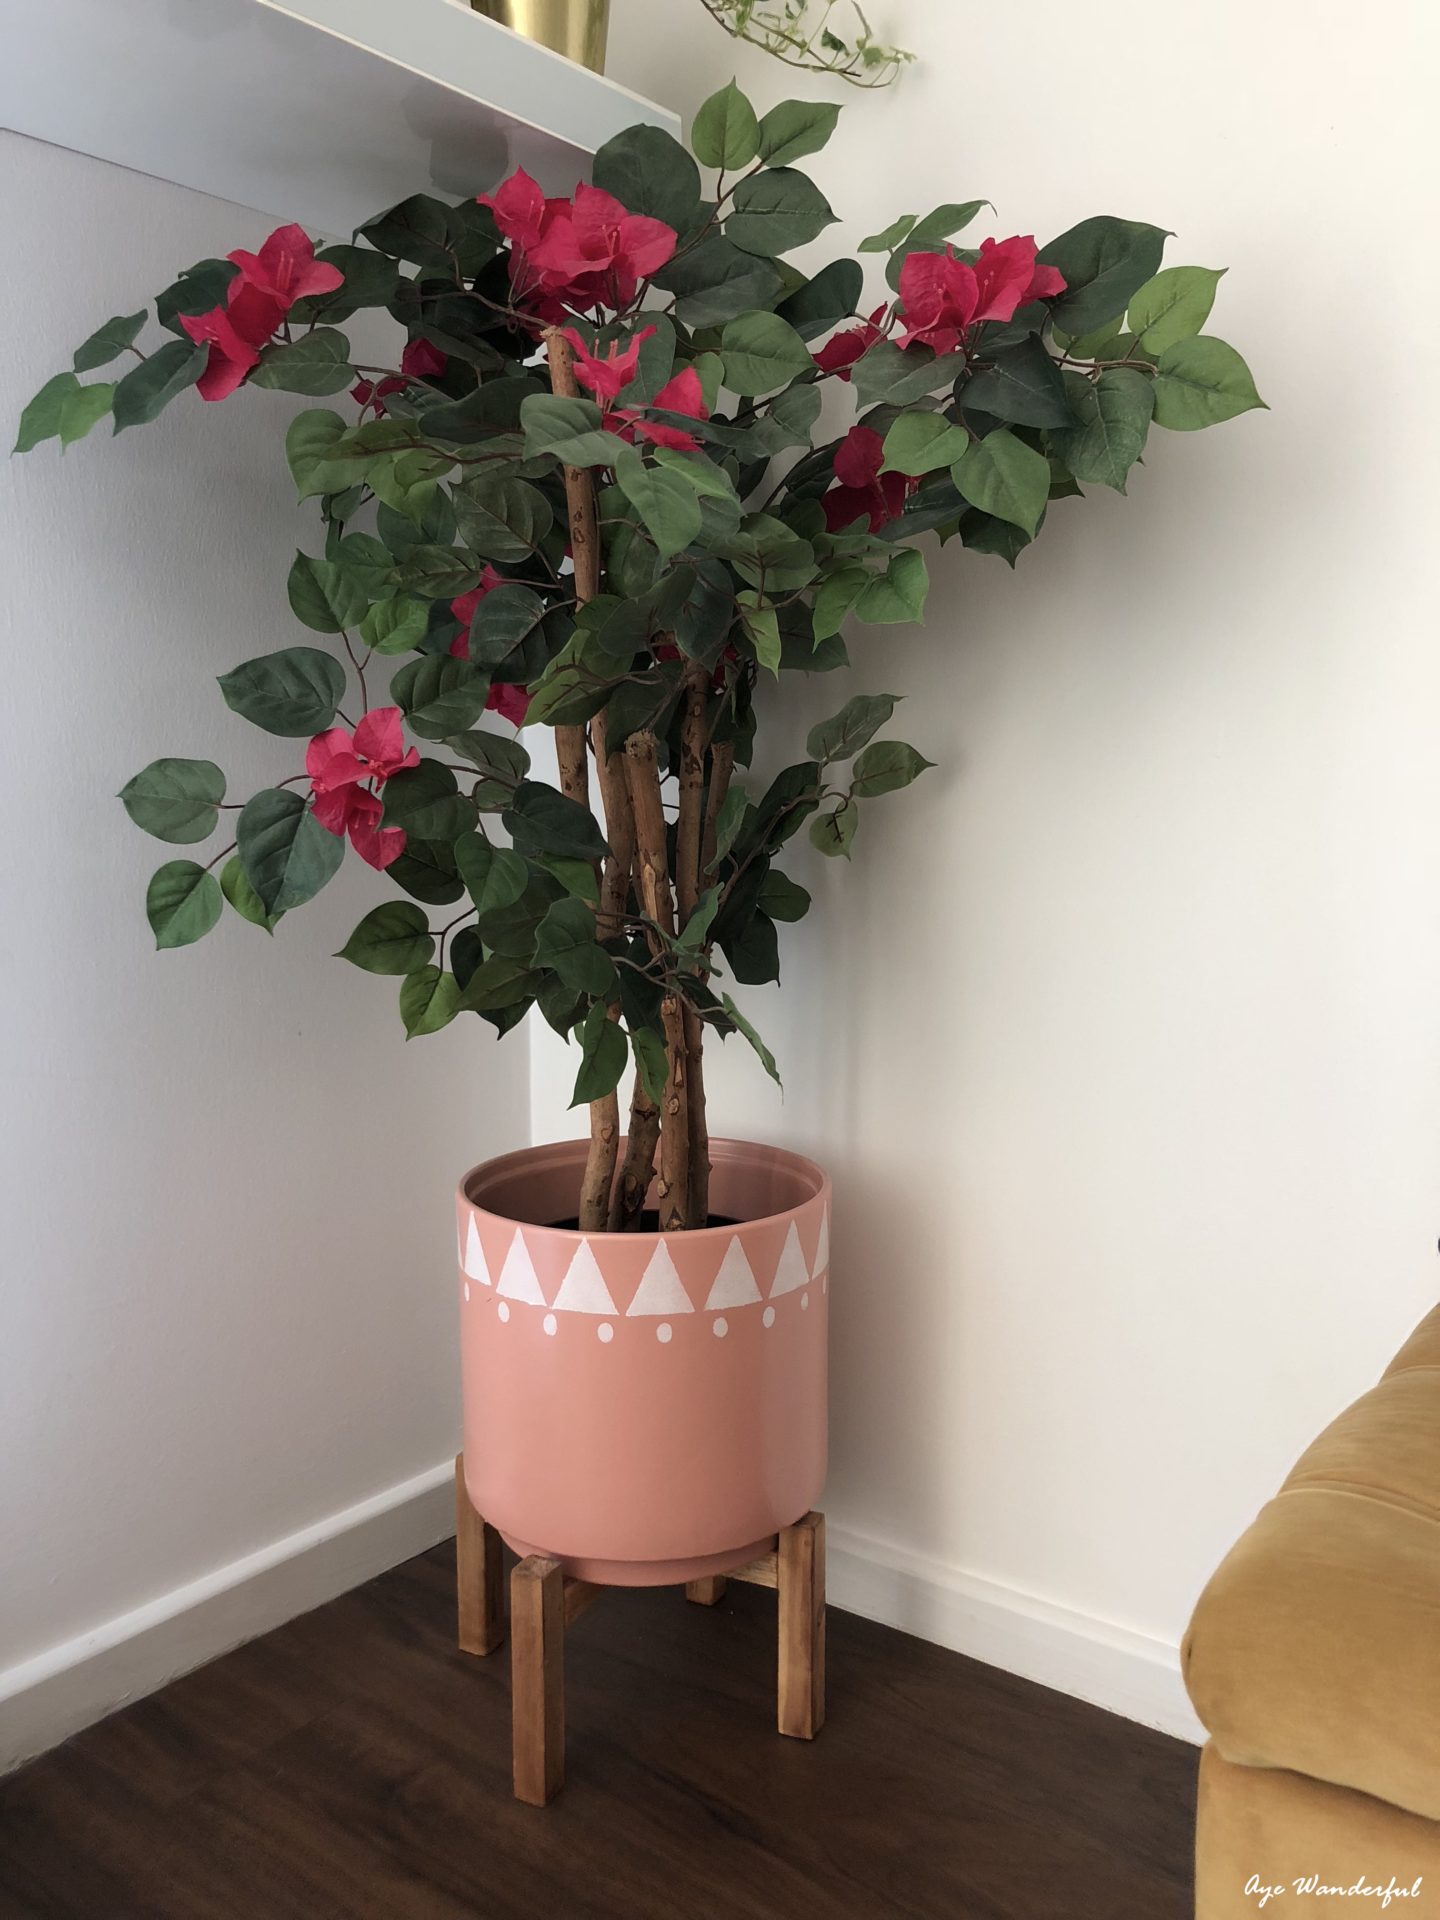 Using Ceramics in Home Decor | Planter | Plant Pot